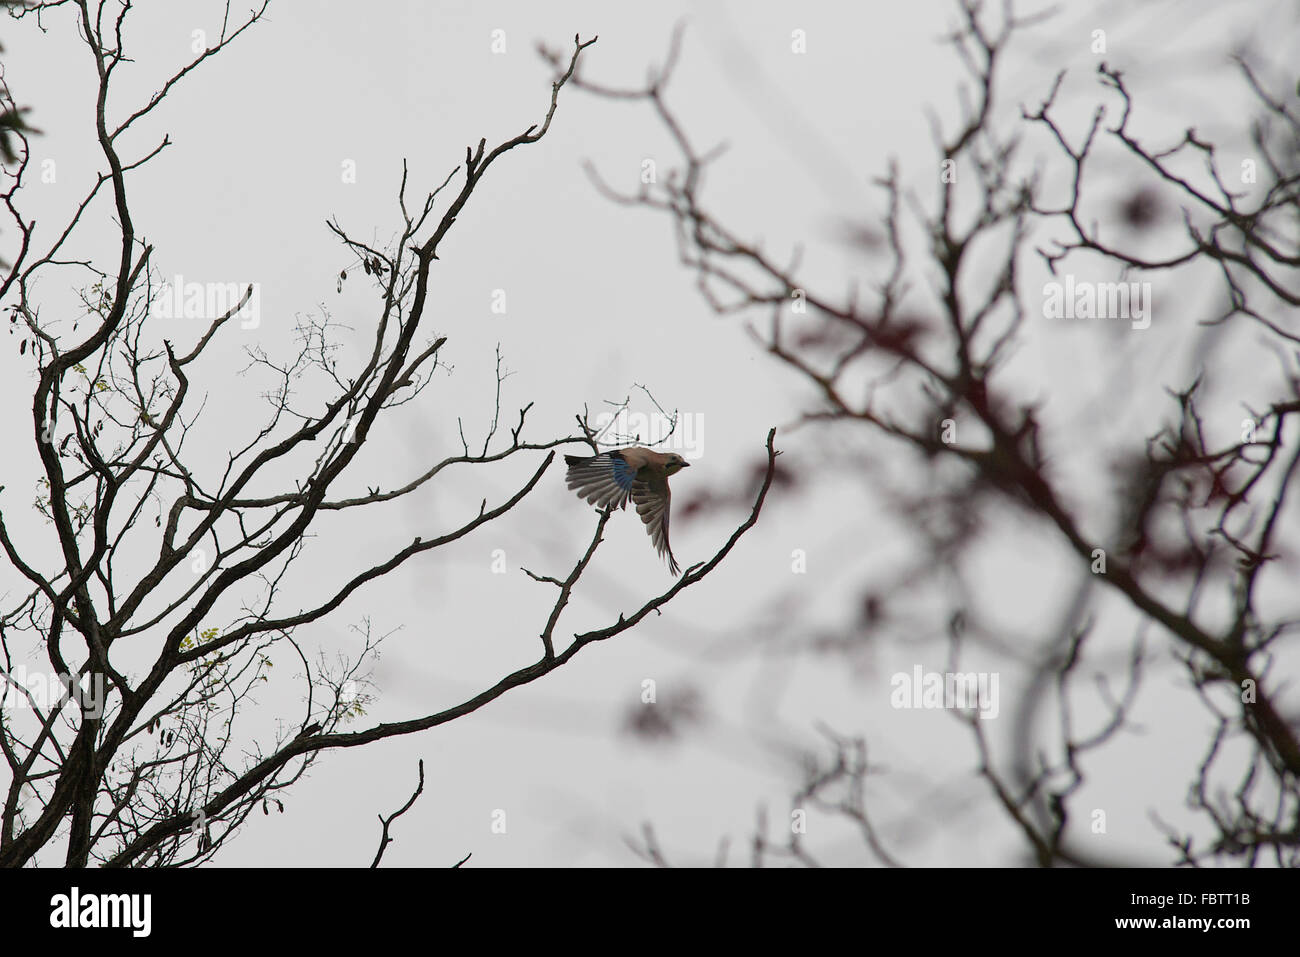 Bird flying through bare tree branches Stock Photo